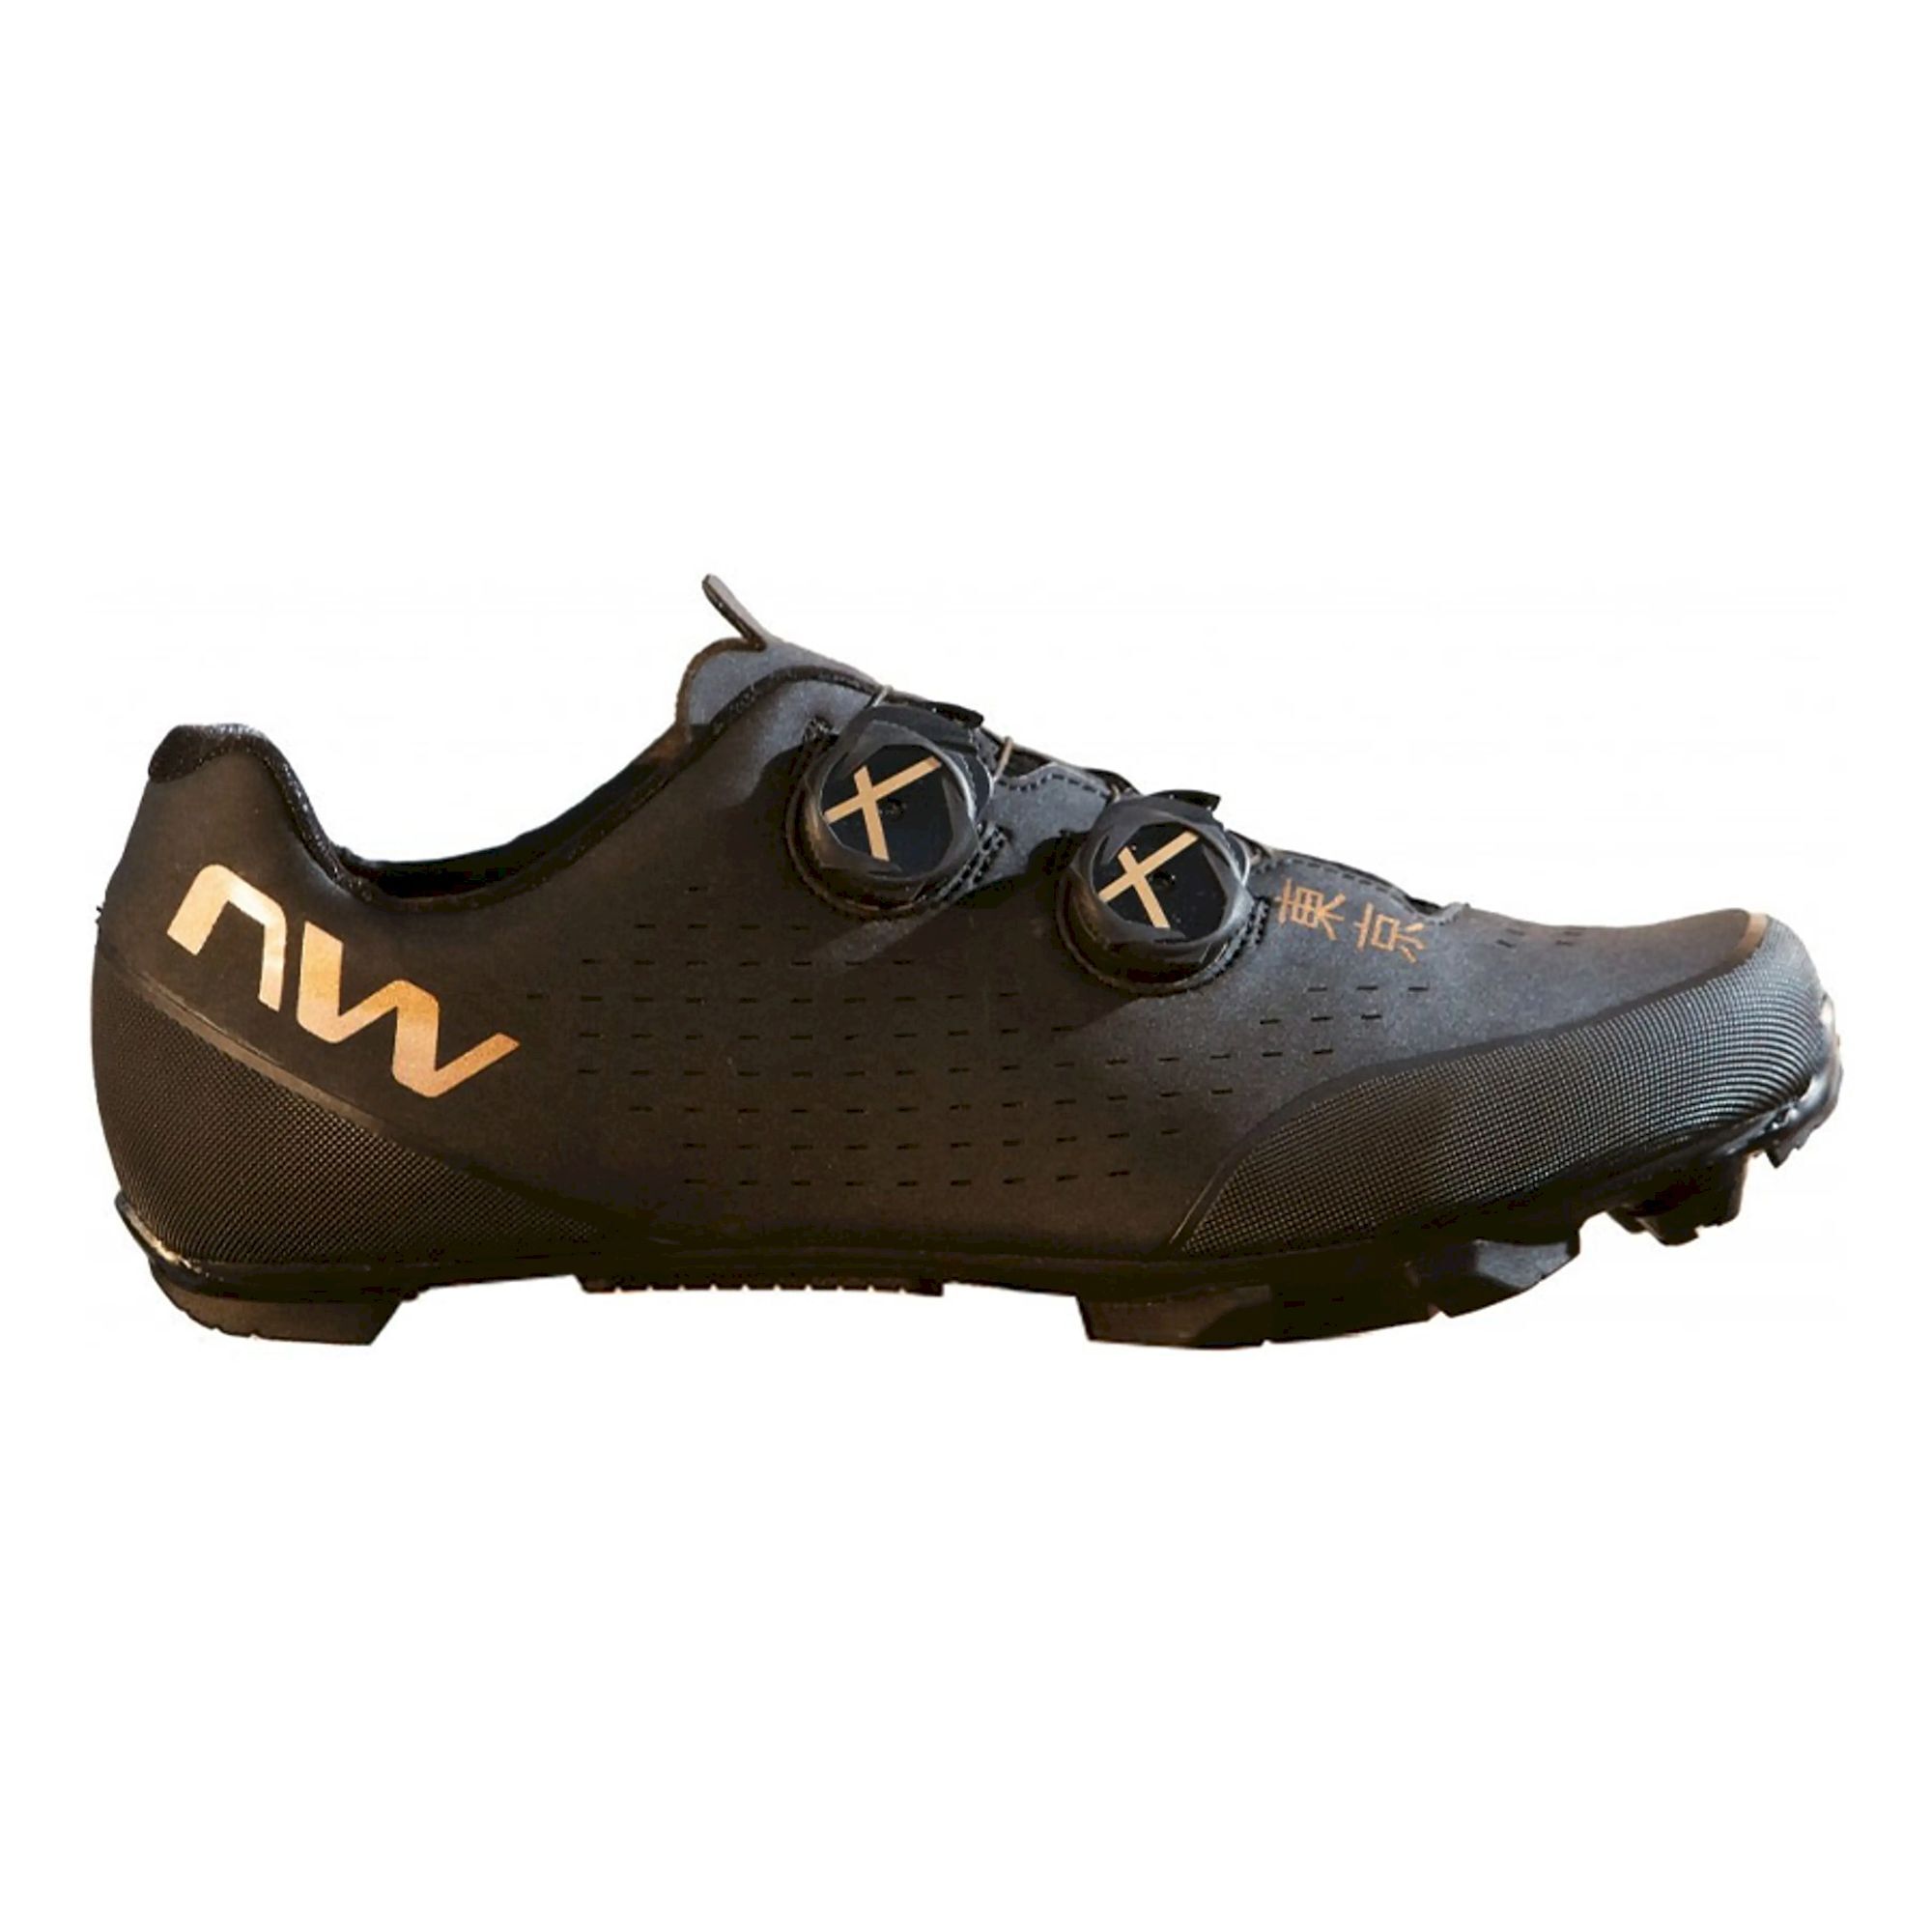 Northwave Rebel 3 - Mountain Bike shoes - Men's